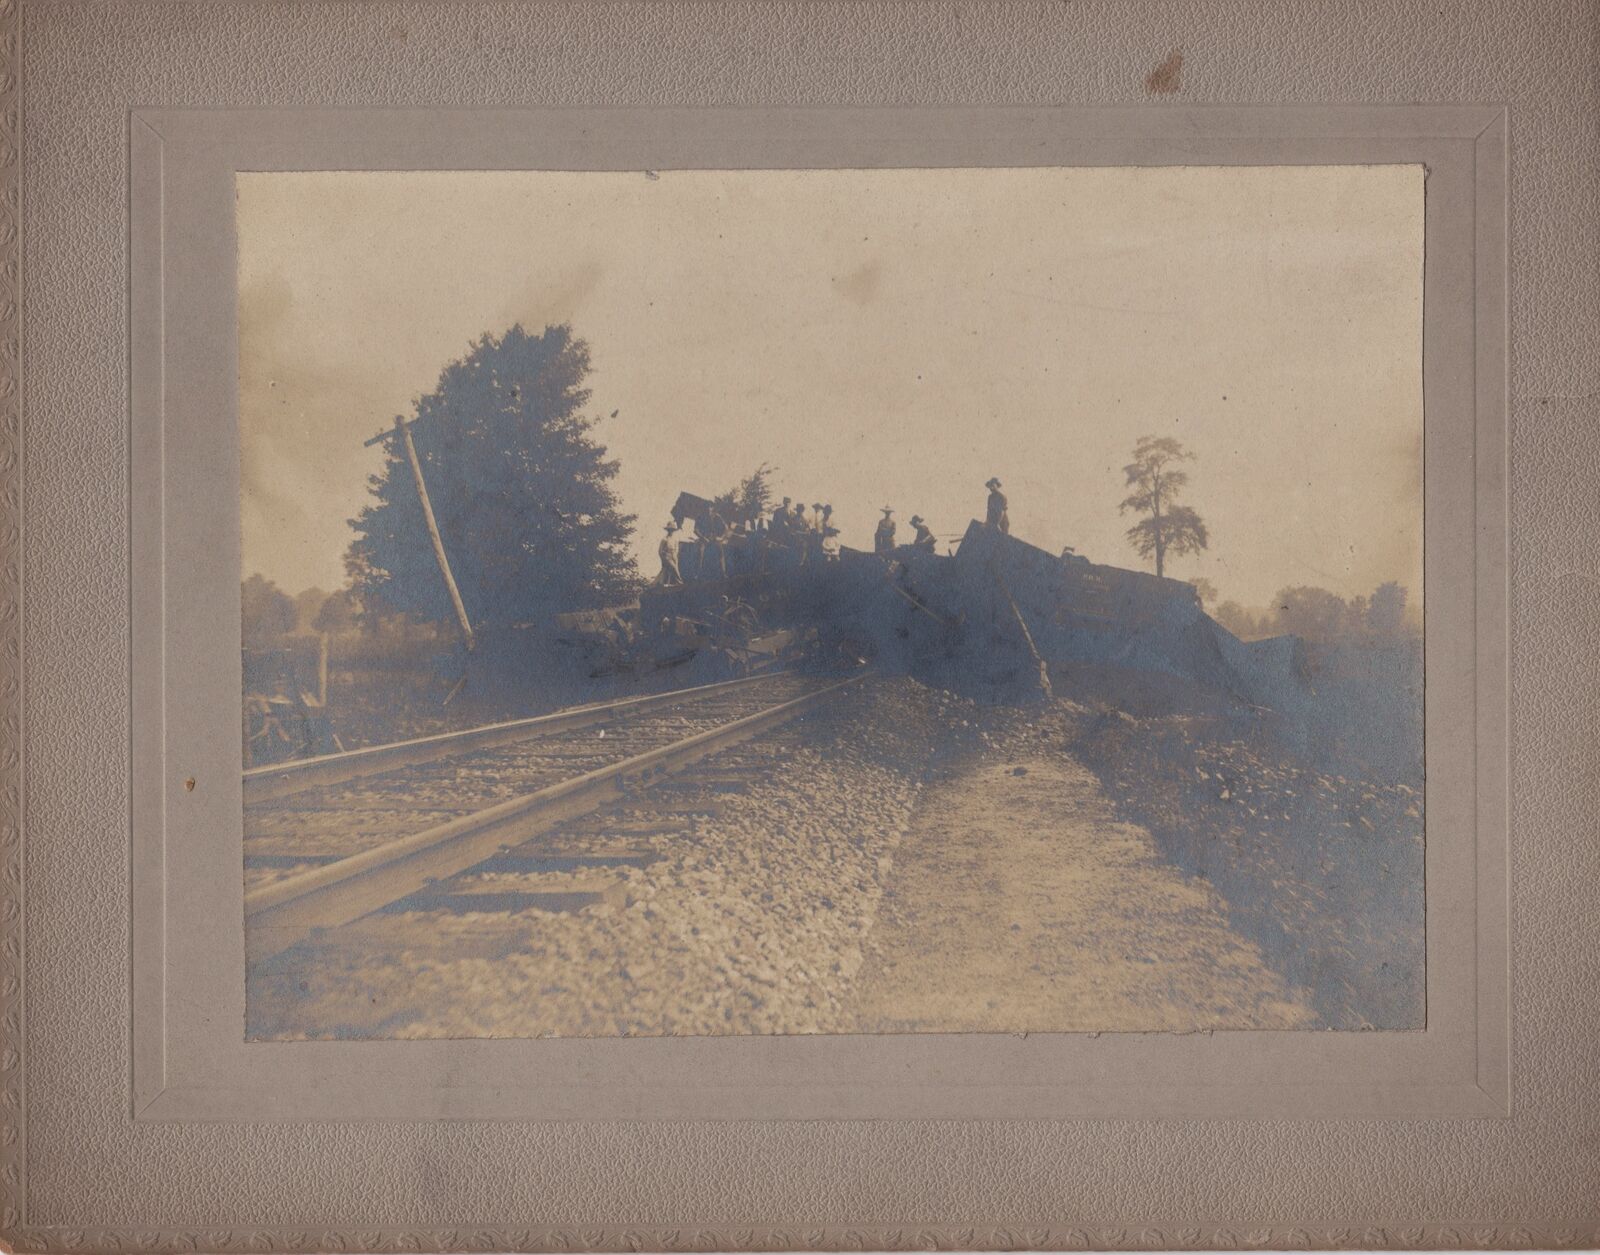 CARD MTG. PHOTO c.1908 Pennsylvania Railroad TRAIN WRECK PRR established 1846 2